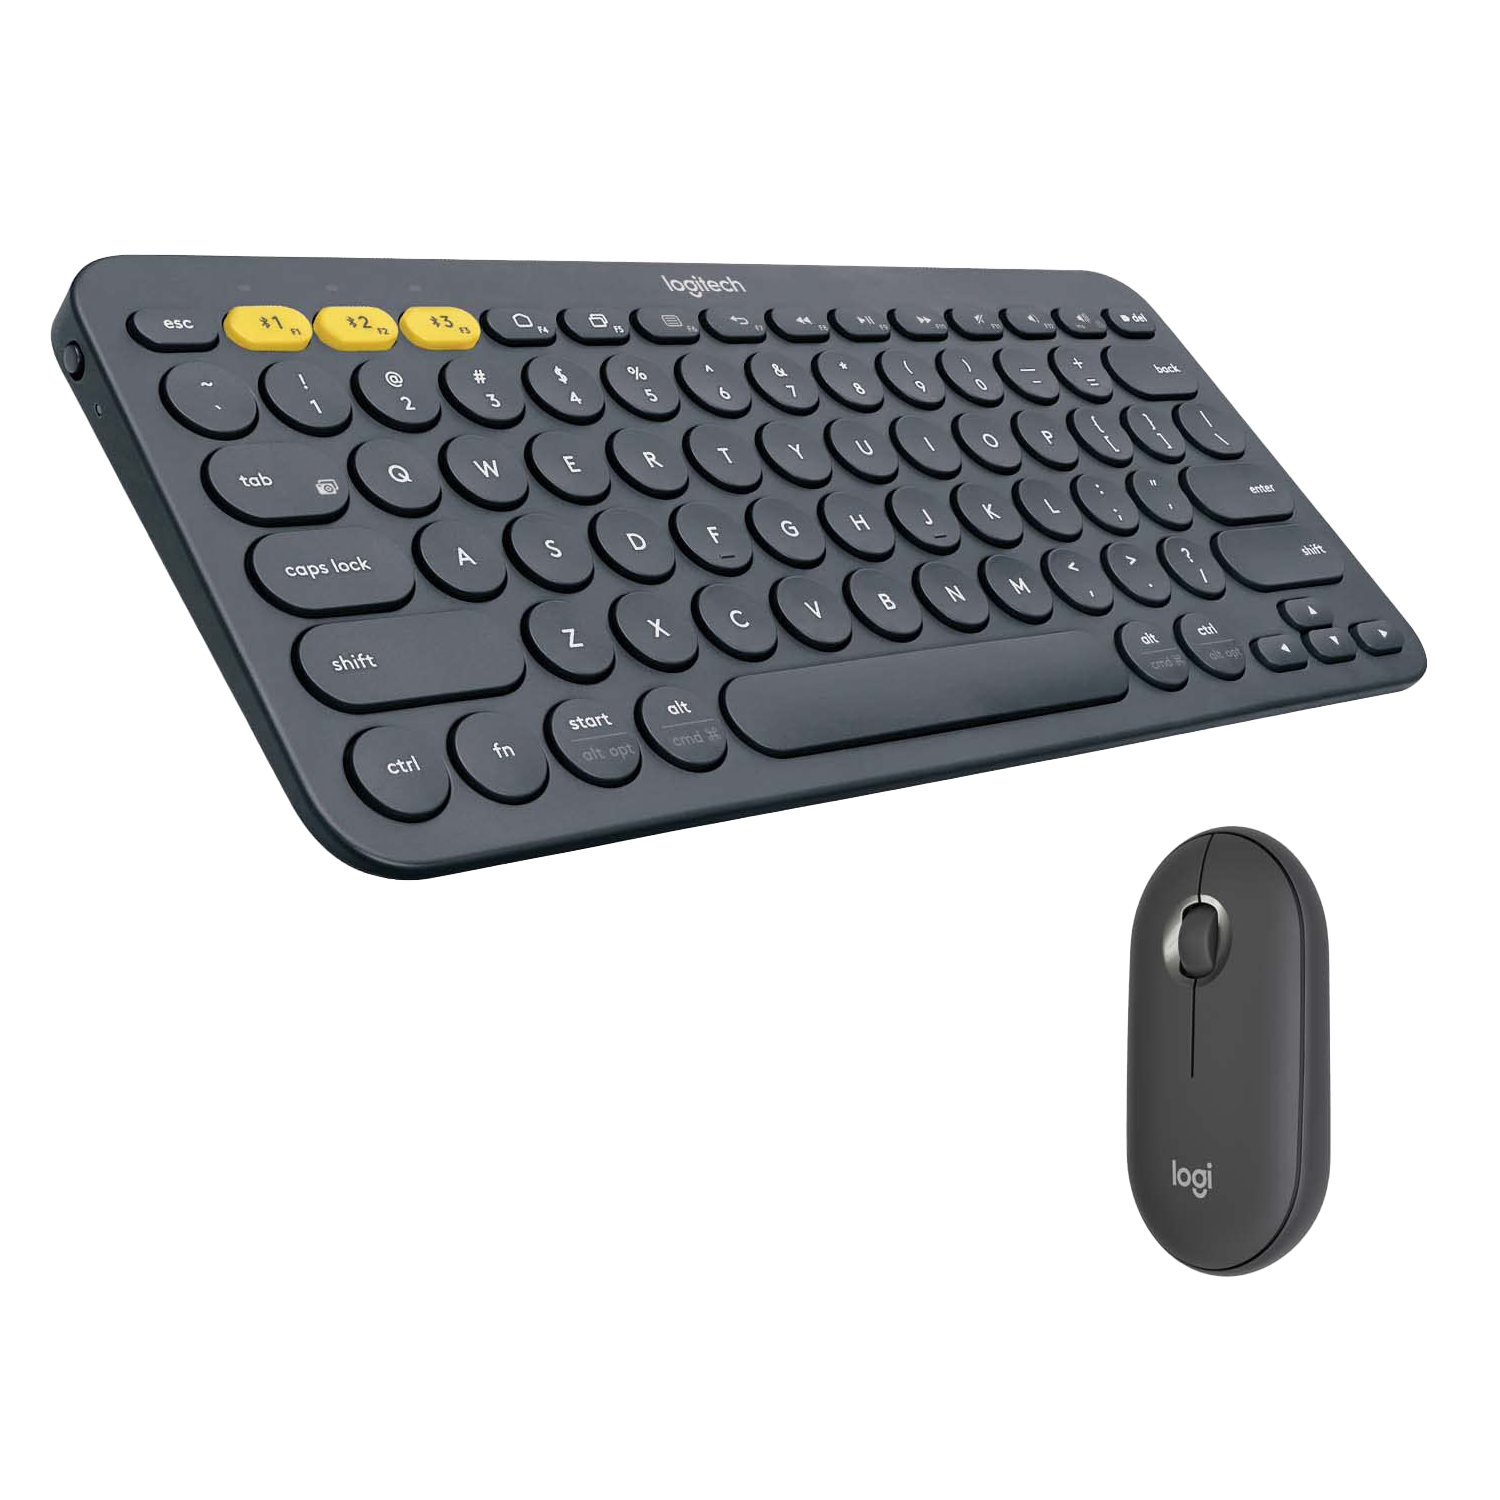 Logitech K380 keyboard and M350 mouse